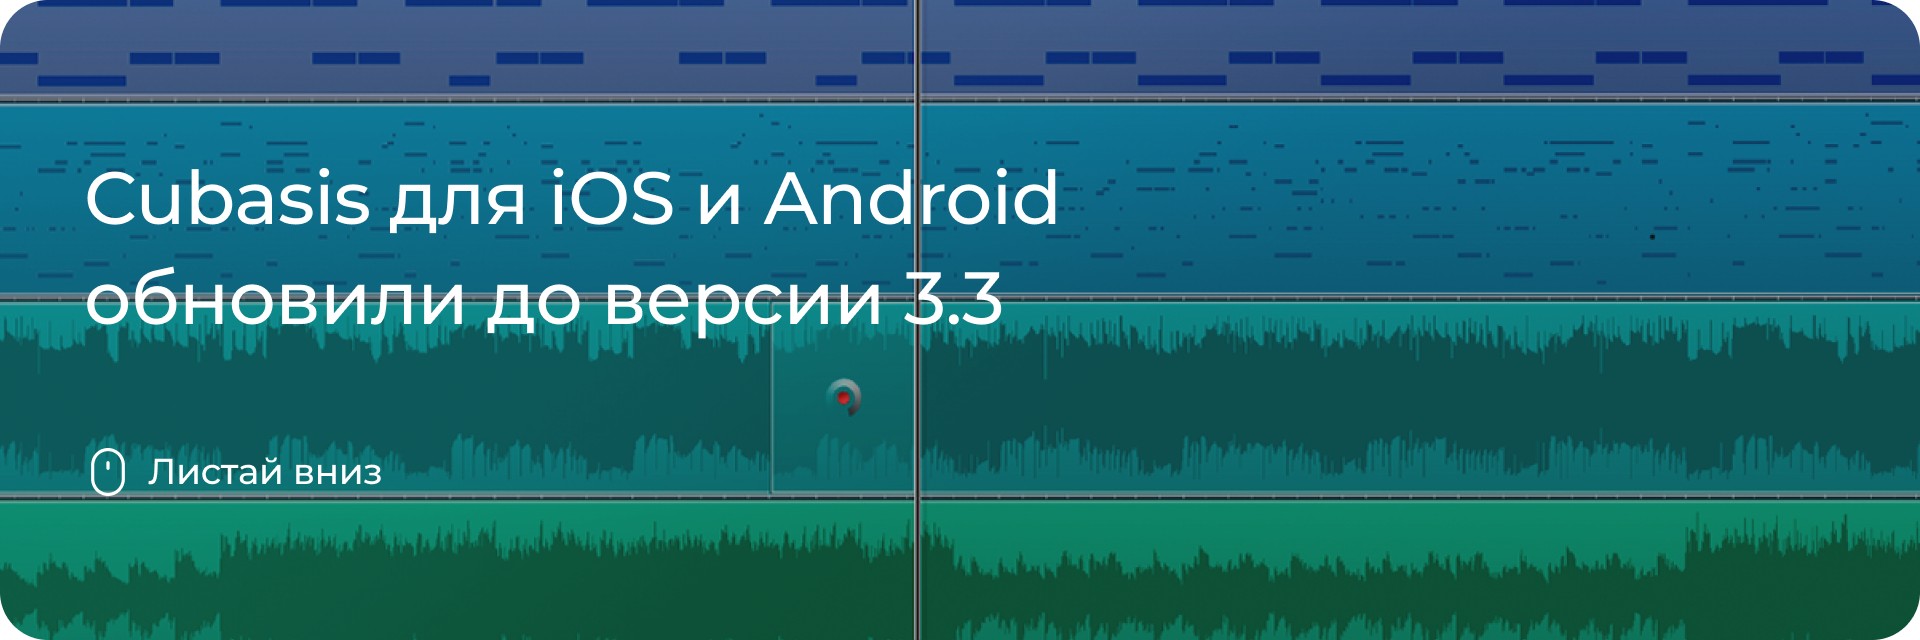 Cubasis для iOS и Android обновили до версии 3.3